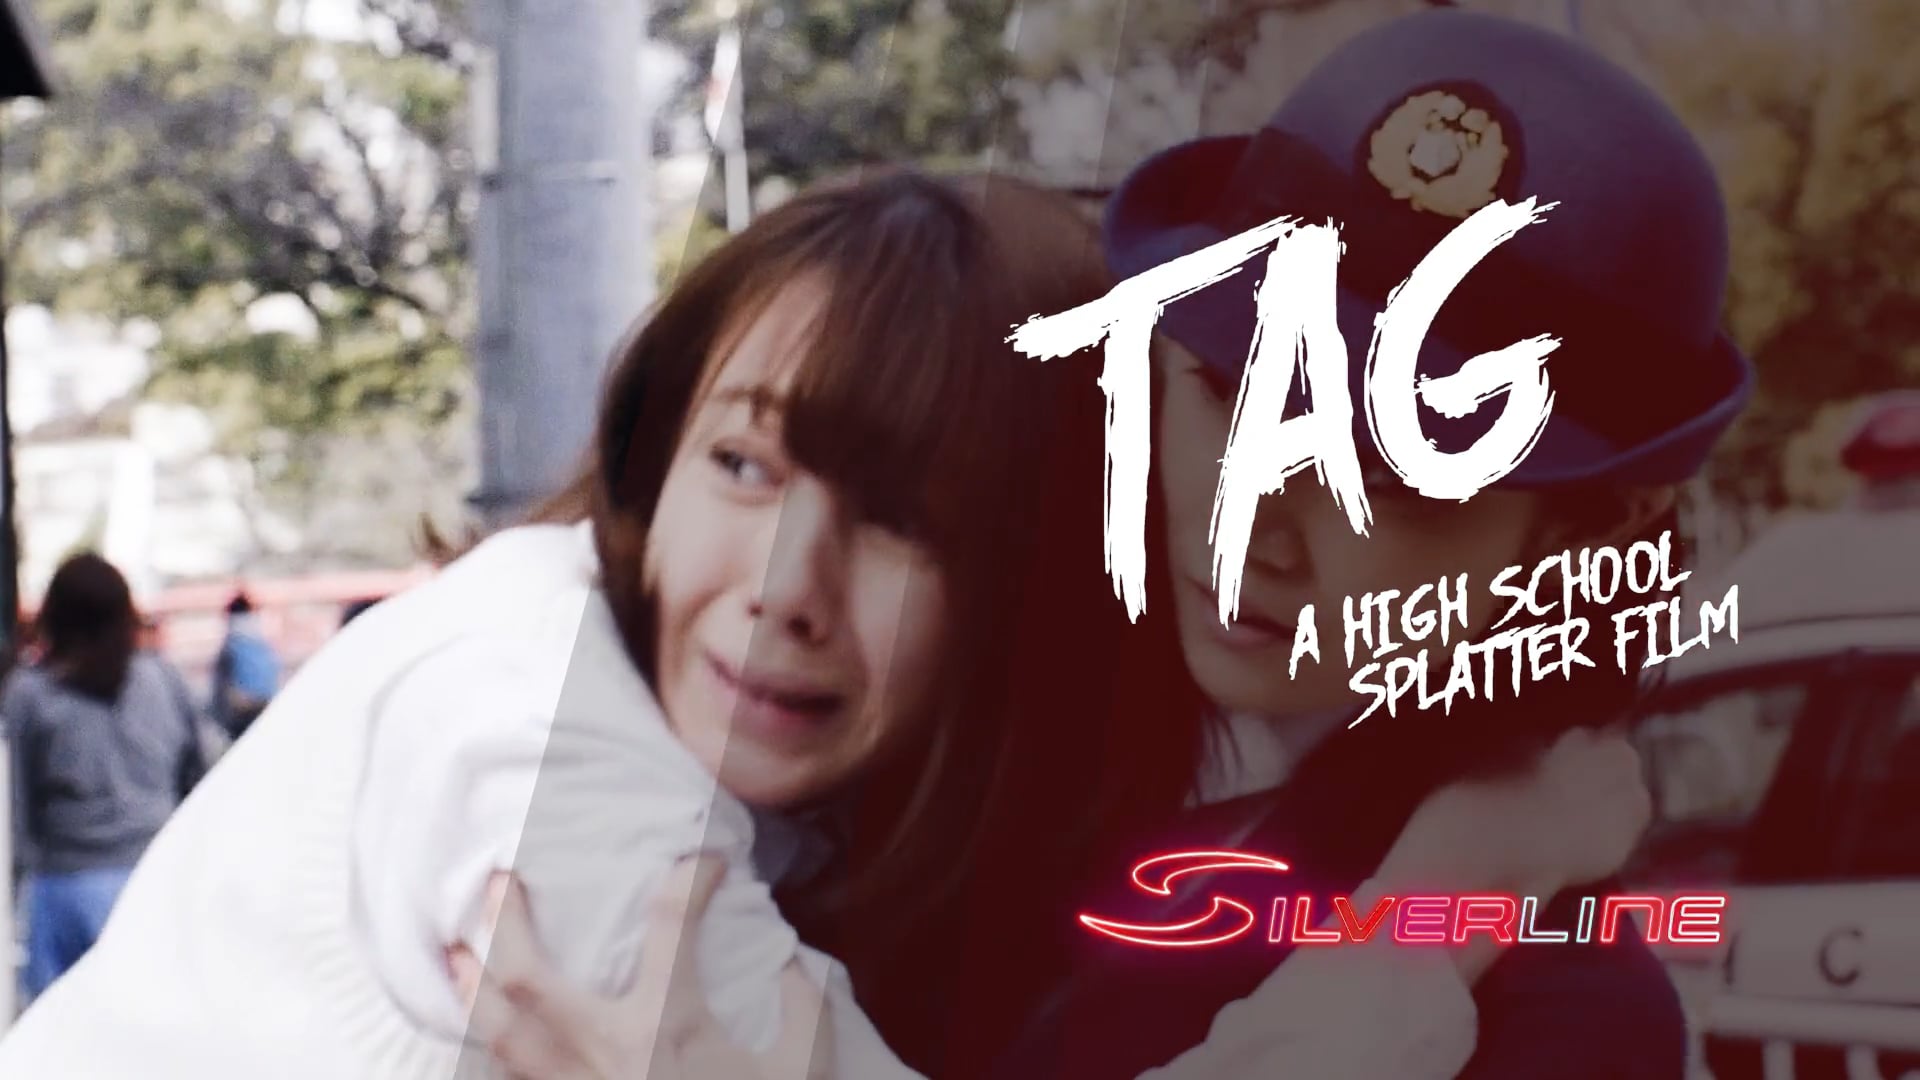 tag-a-high-school-splatter-film-trailer-on-vimeo